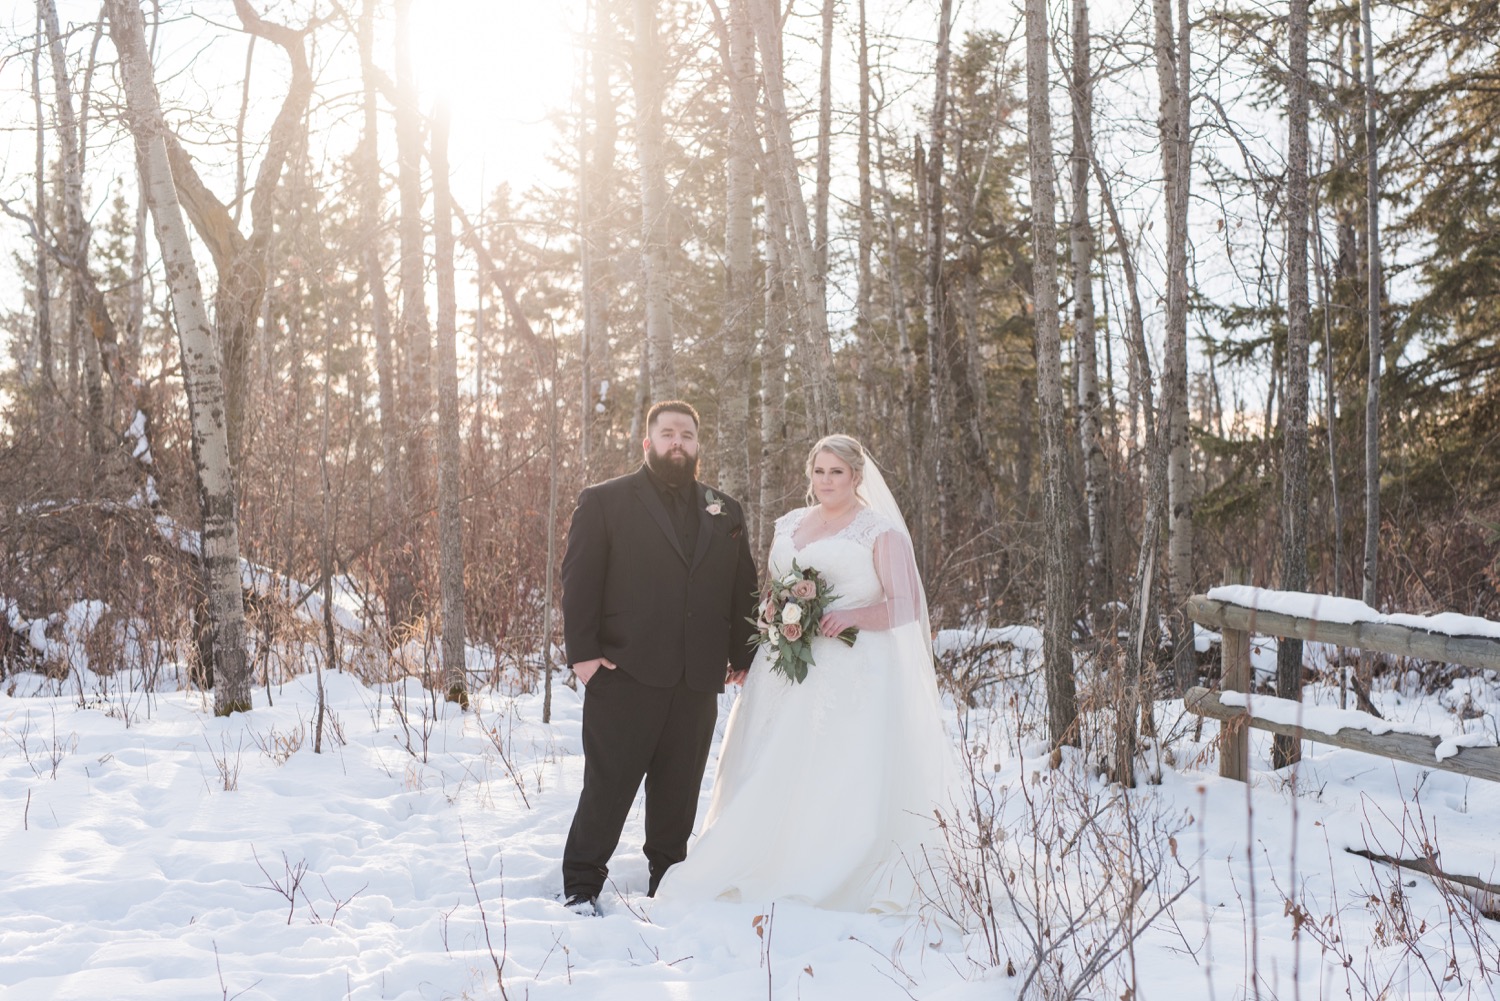 Outdoor Winter Wedding - Lynley & Chris